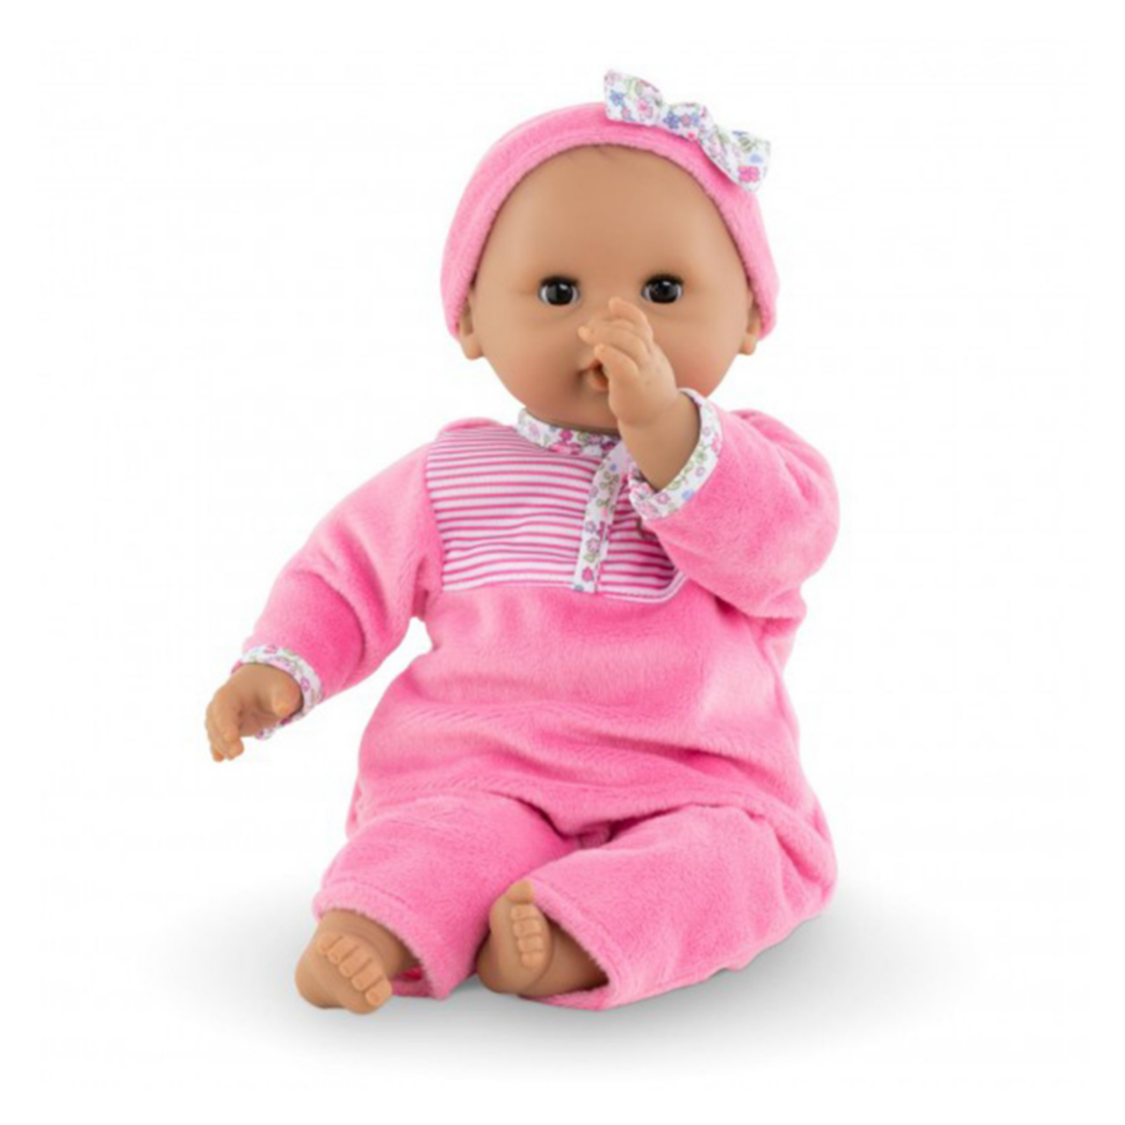 Baby dolls, mon premier poupon Corolle – 18 months + - Corolle ®